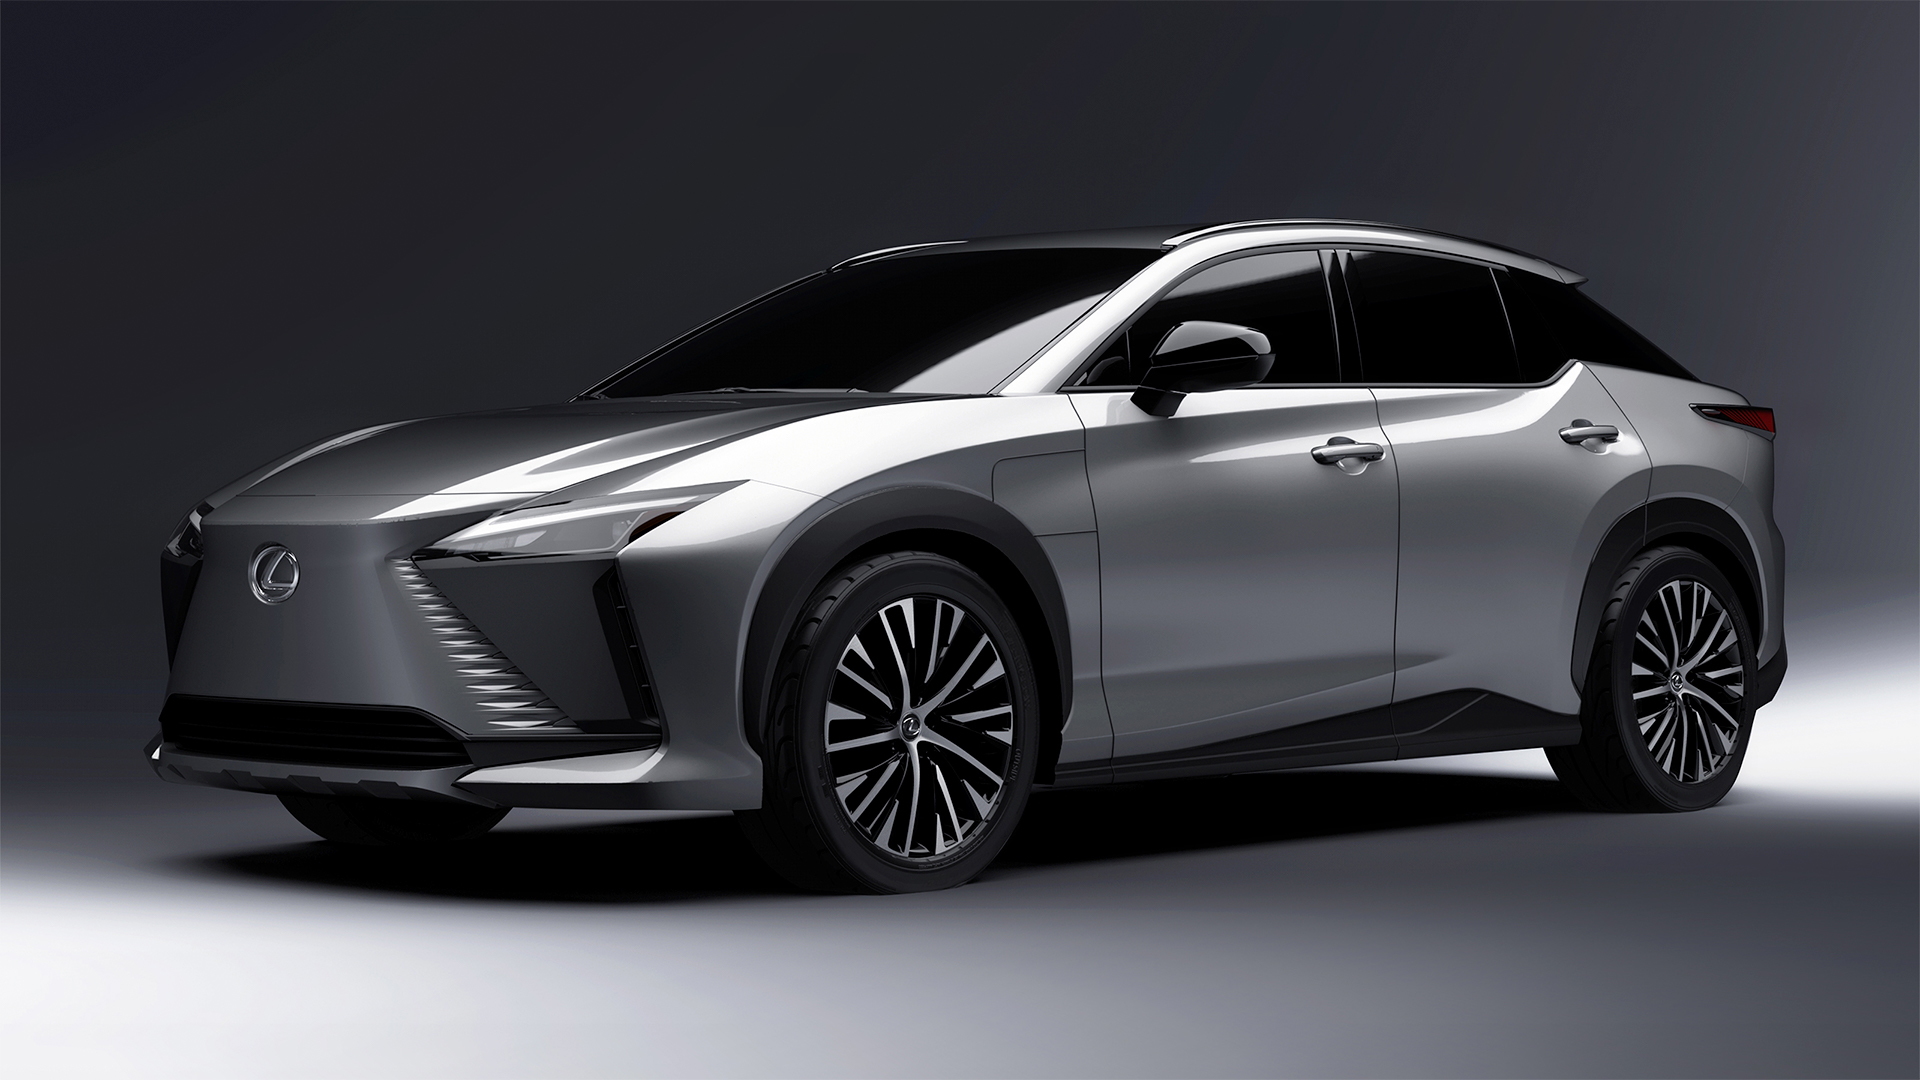 Lexus electric sports car, sedan, SUV further revealed in photo